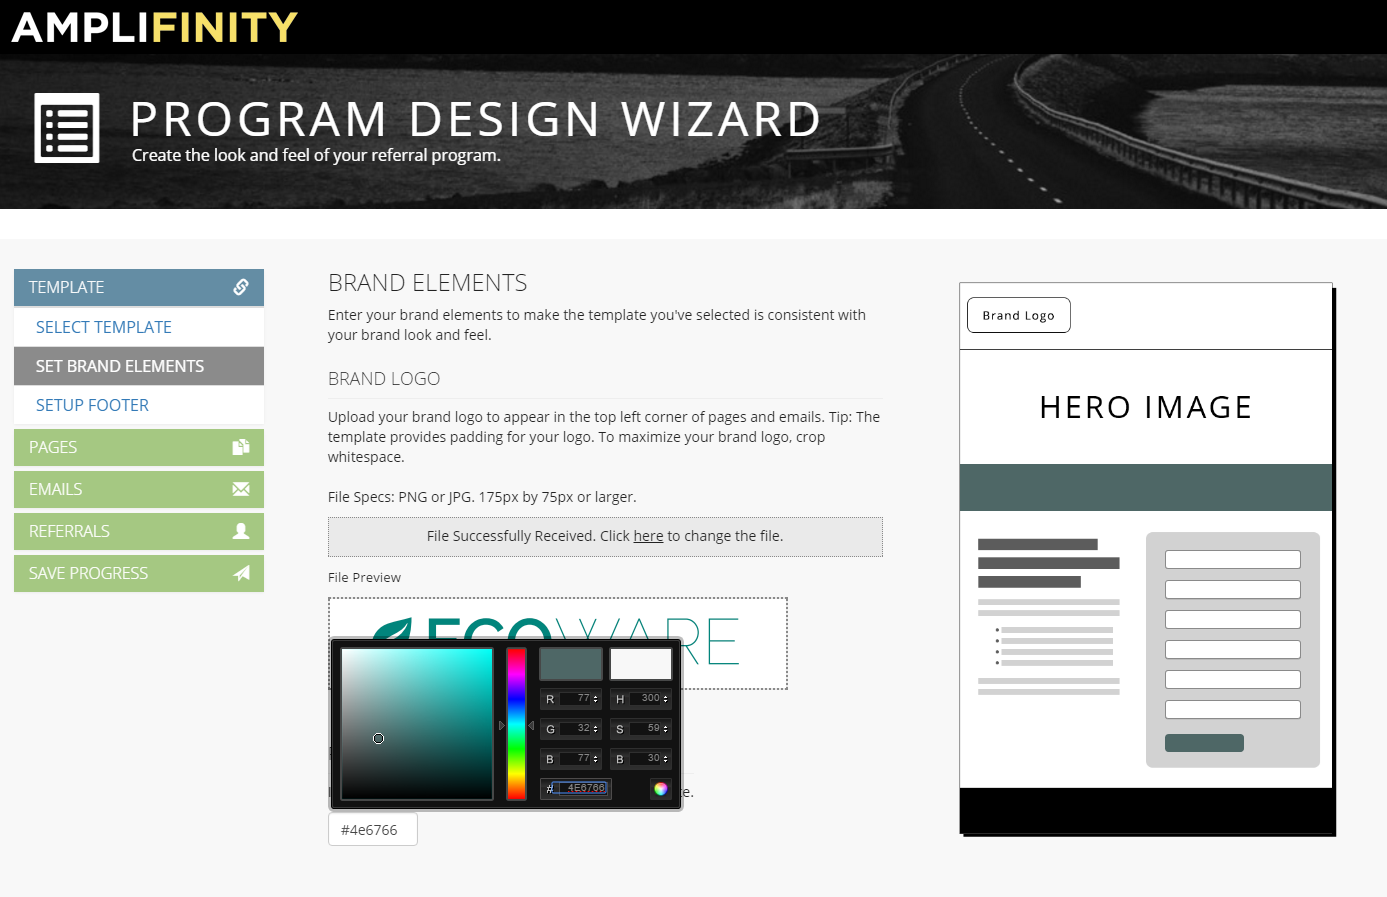 Amplifinity Base Program Design Wizard Screenshot